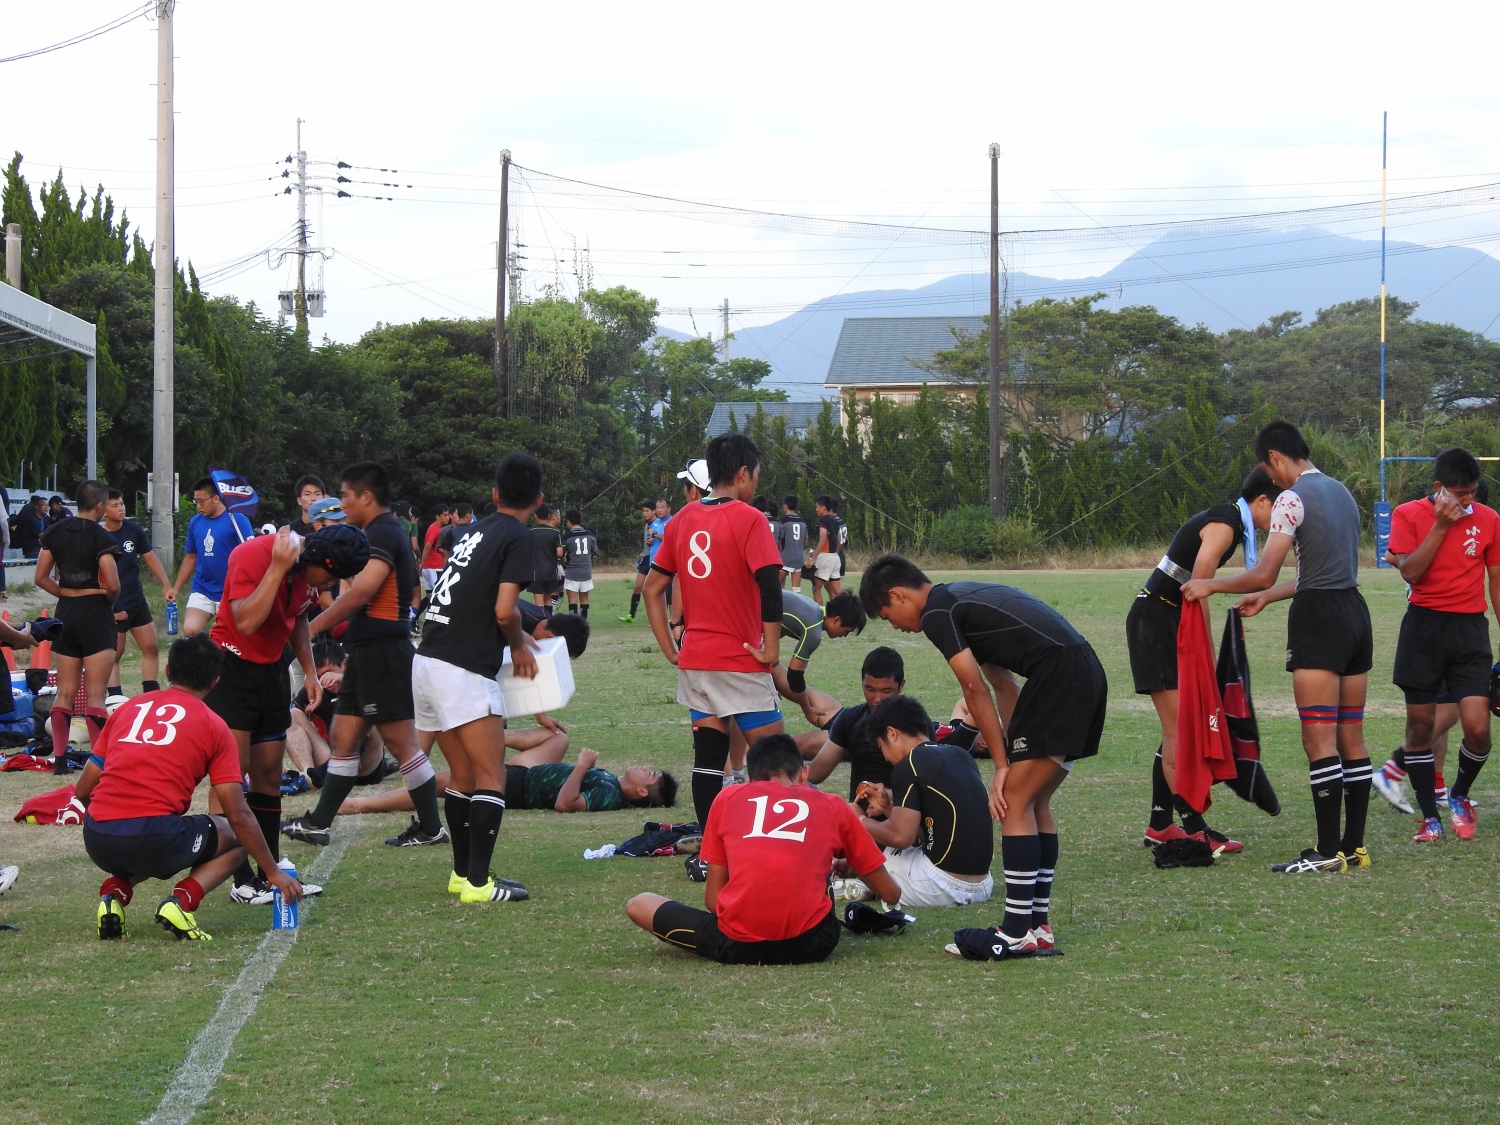 http://kokura-rugby.sakura.ne.jp/DSCN4783_xlarge.JPG